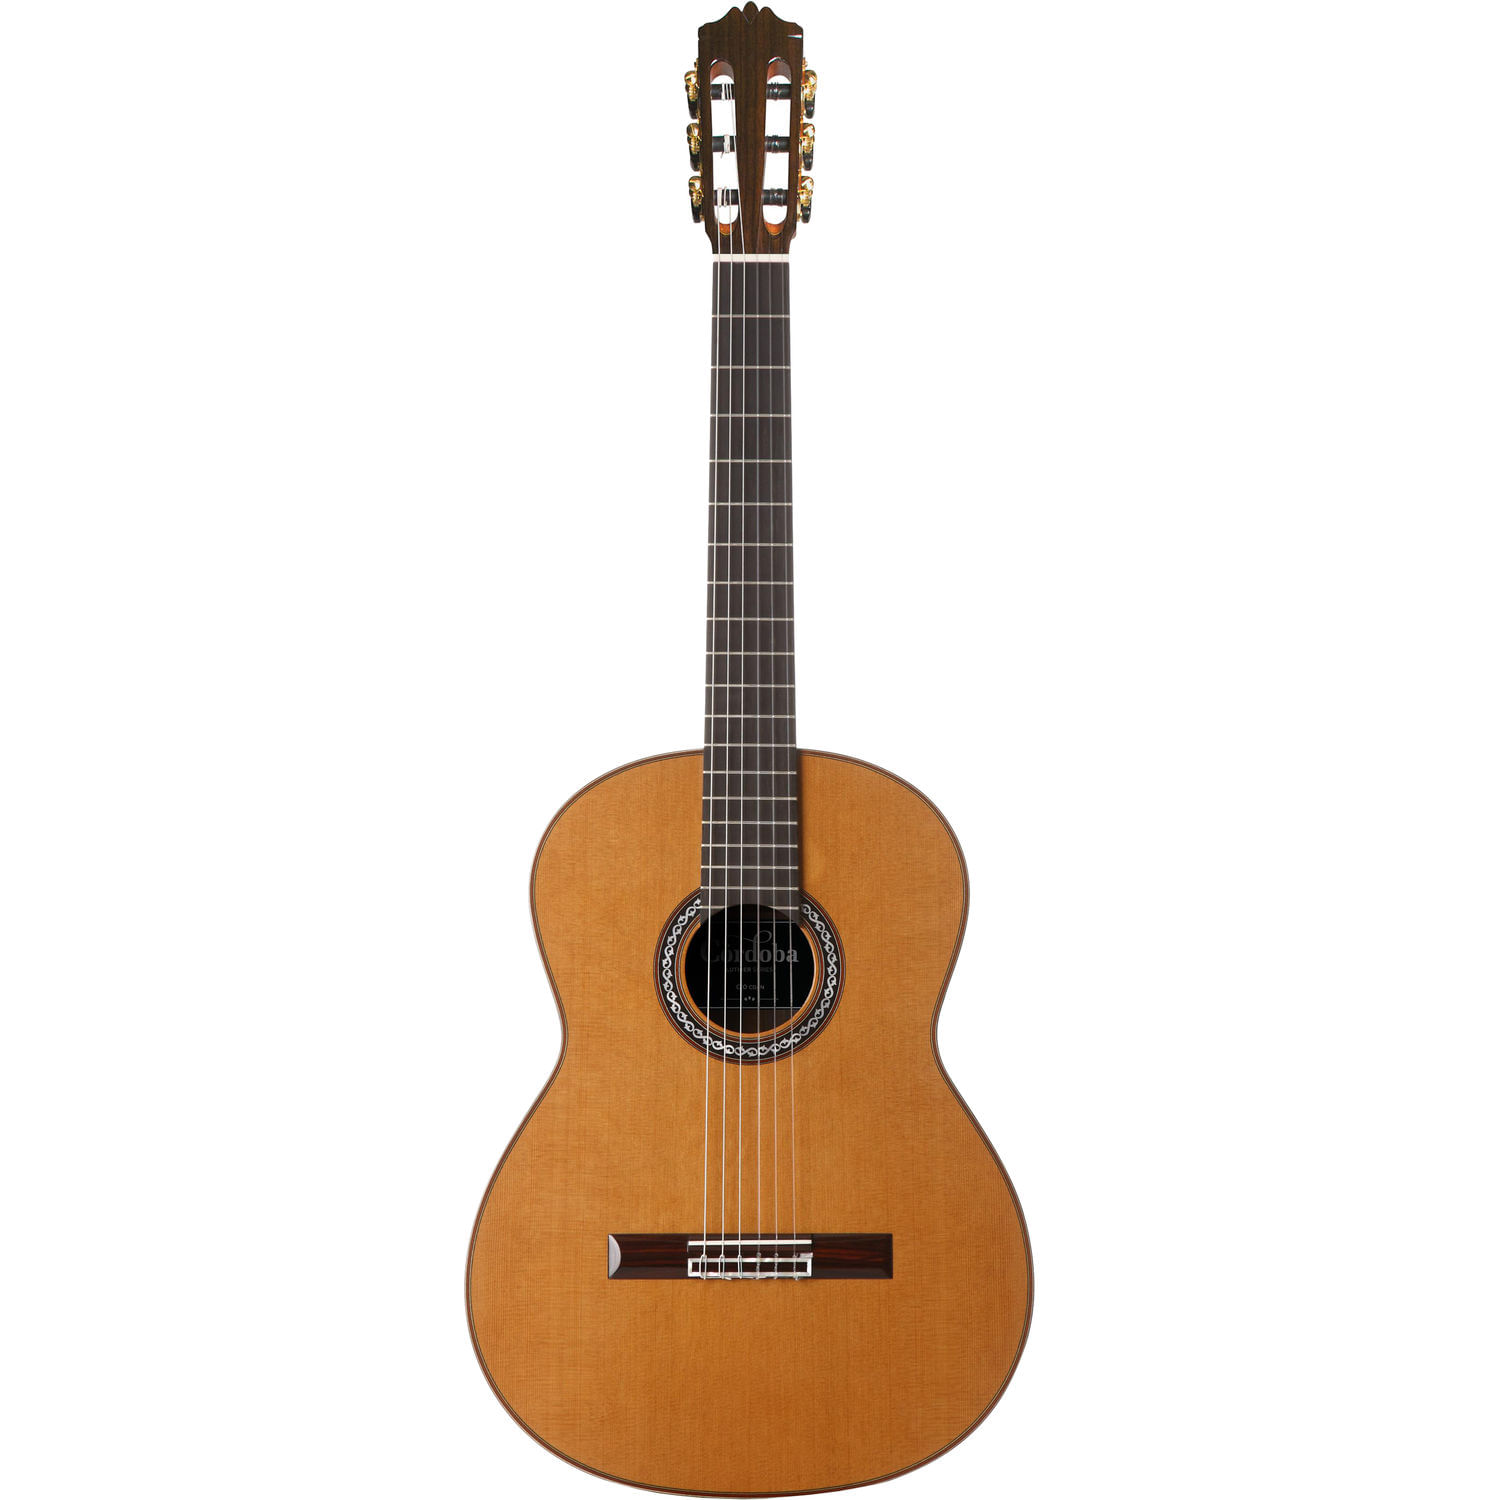 Guitarra Clásica de Cuerdas de Nylon Cordoba C10Cd Luthier Series Acabado Brillante